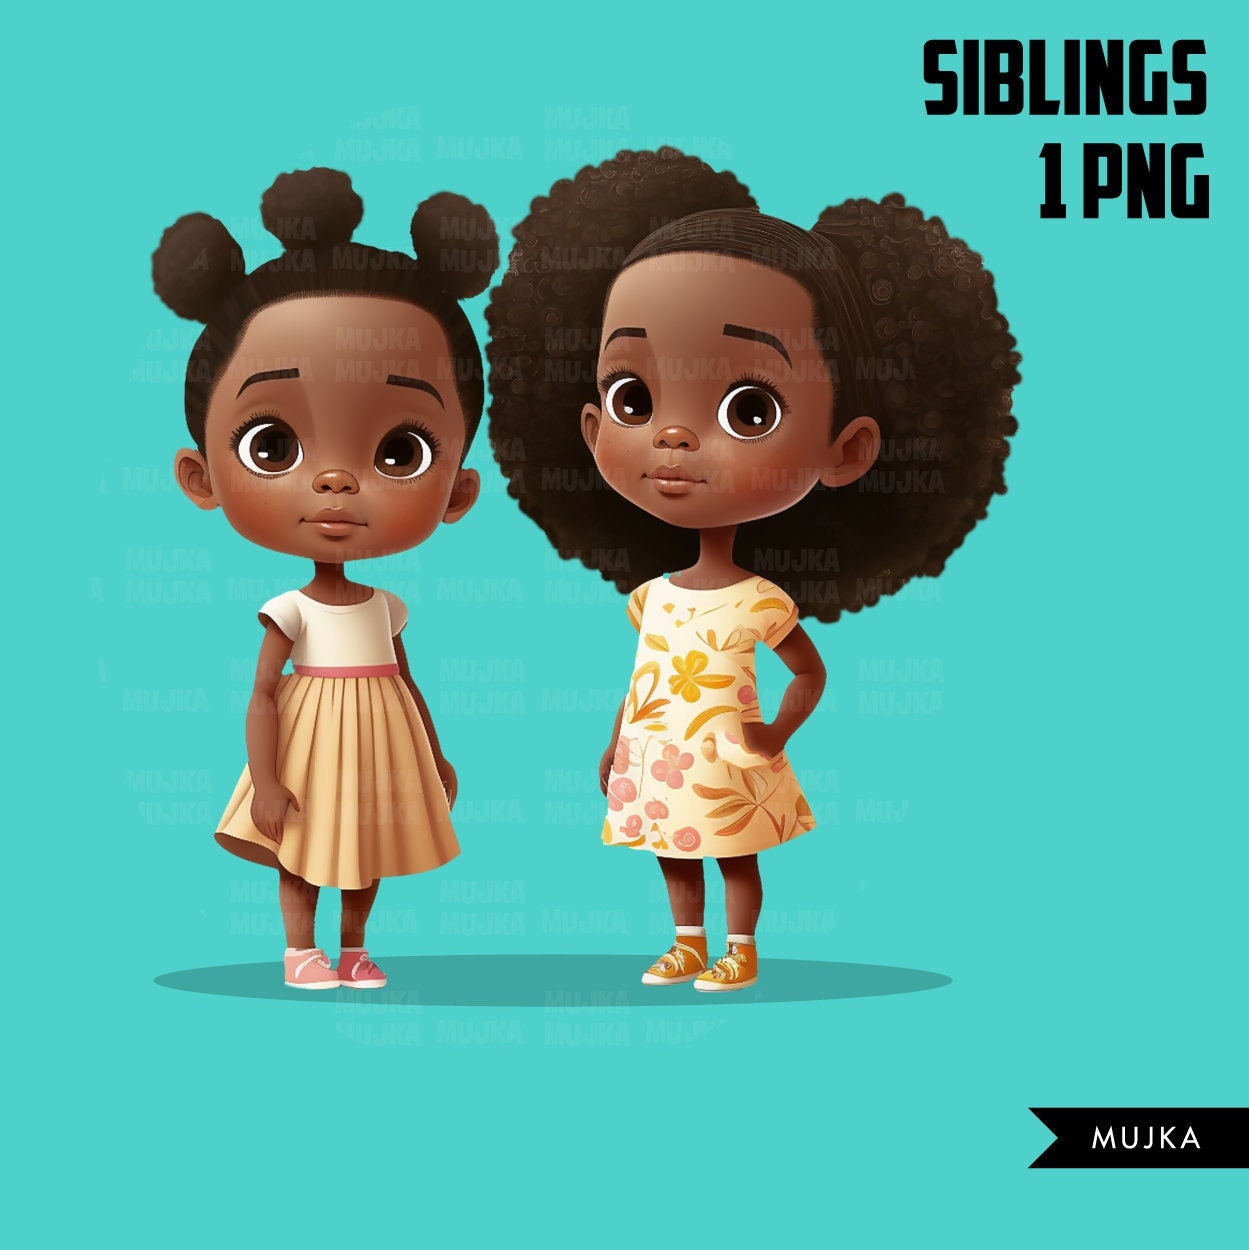 Black girls art, siblings png, friends png, family png, black